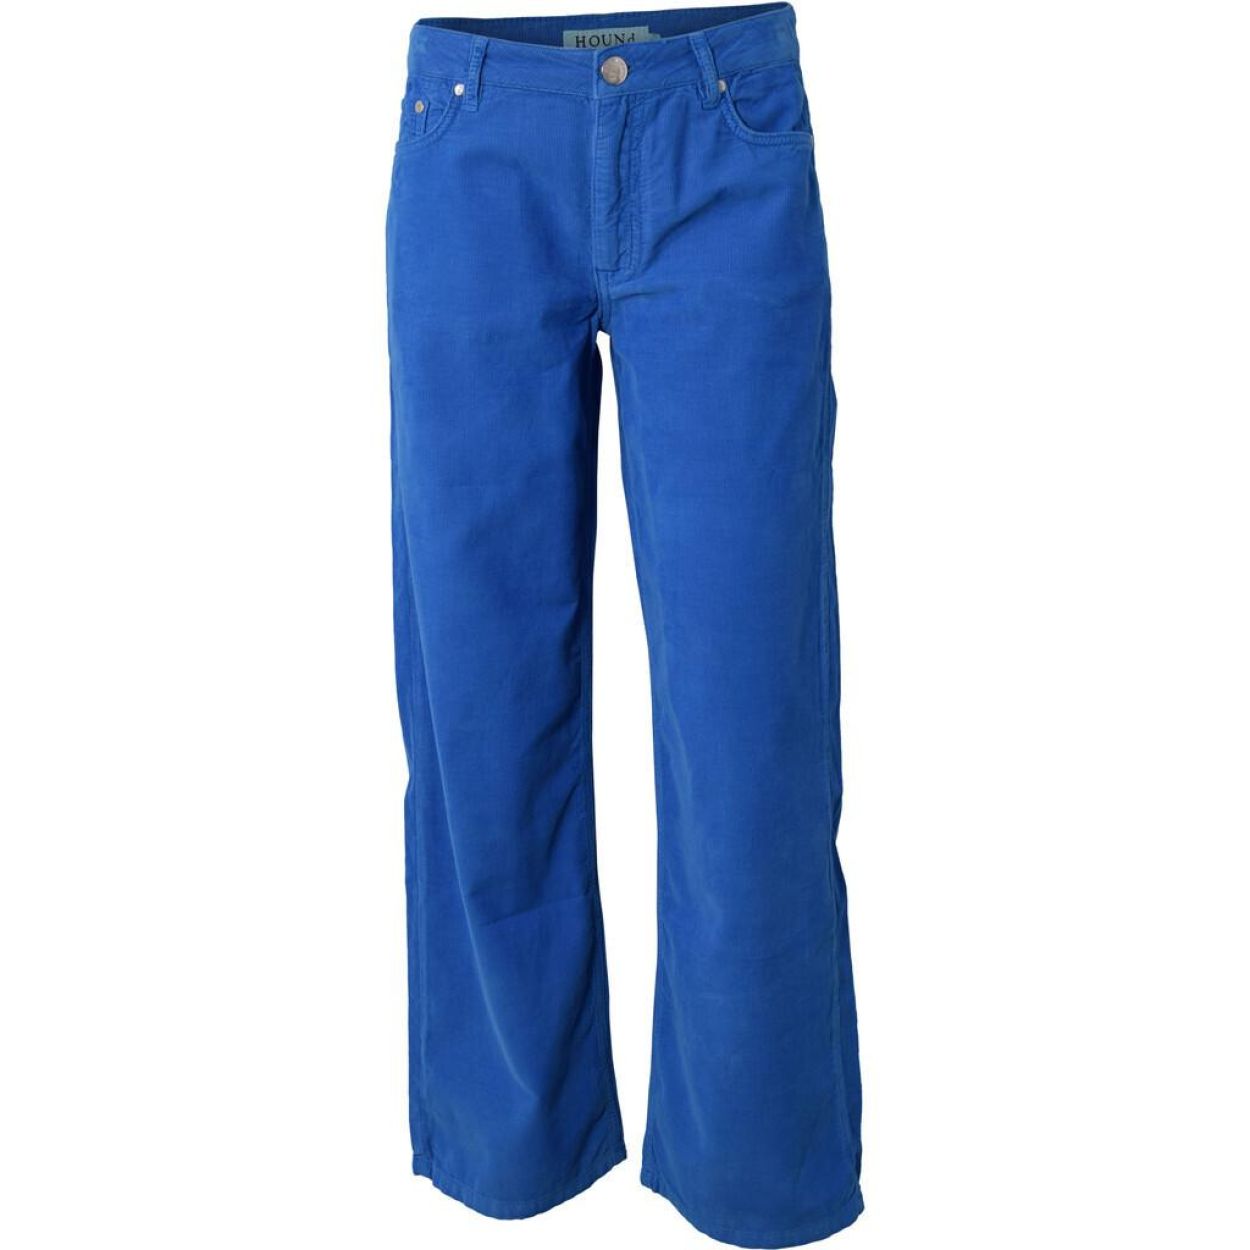 HOUNd Corduroy pants (7230861/320 Cobalt blue) - WeekendMode